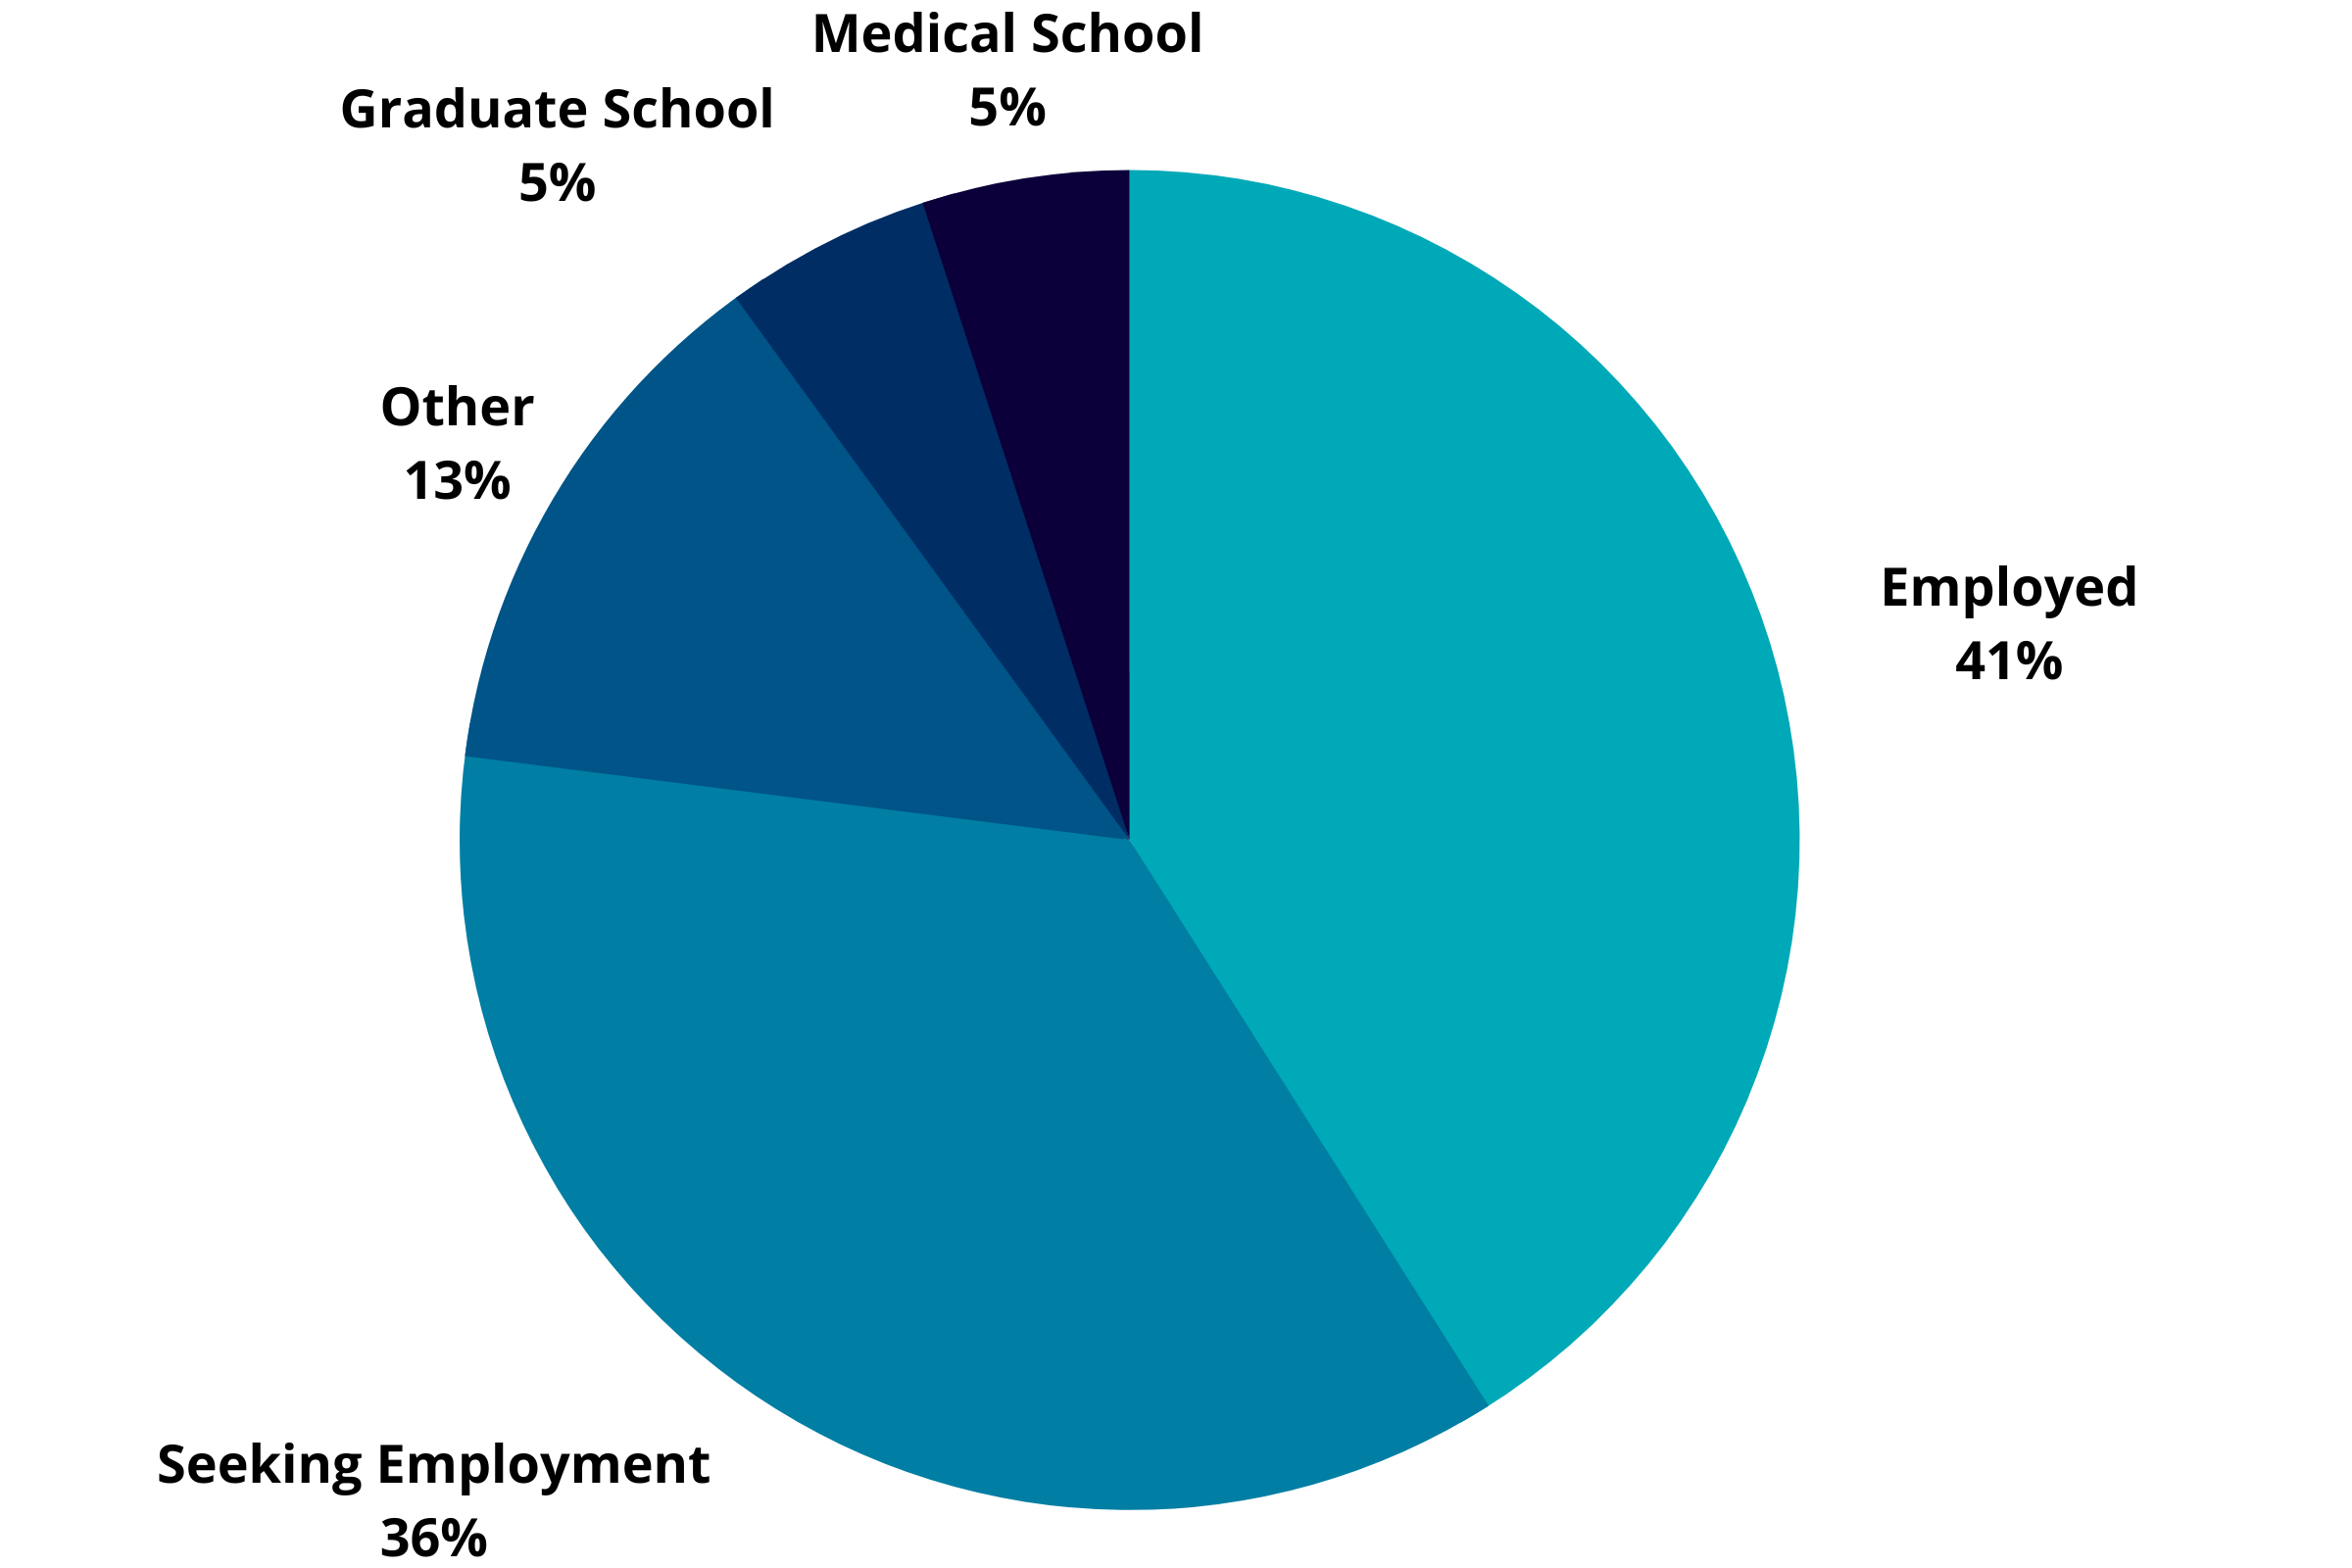 MLS Graduation Outcomes: Employed 41%, Seeking Employment 36%, Graduate School 5%, Medical School 5%, Other 13%